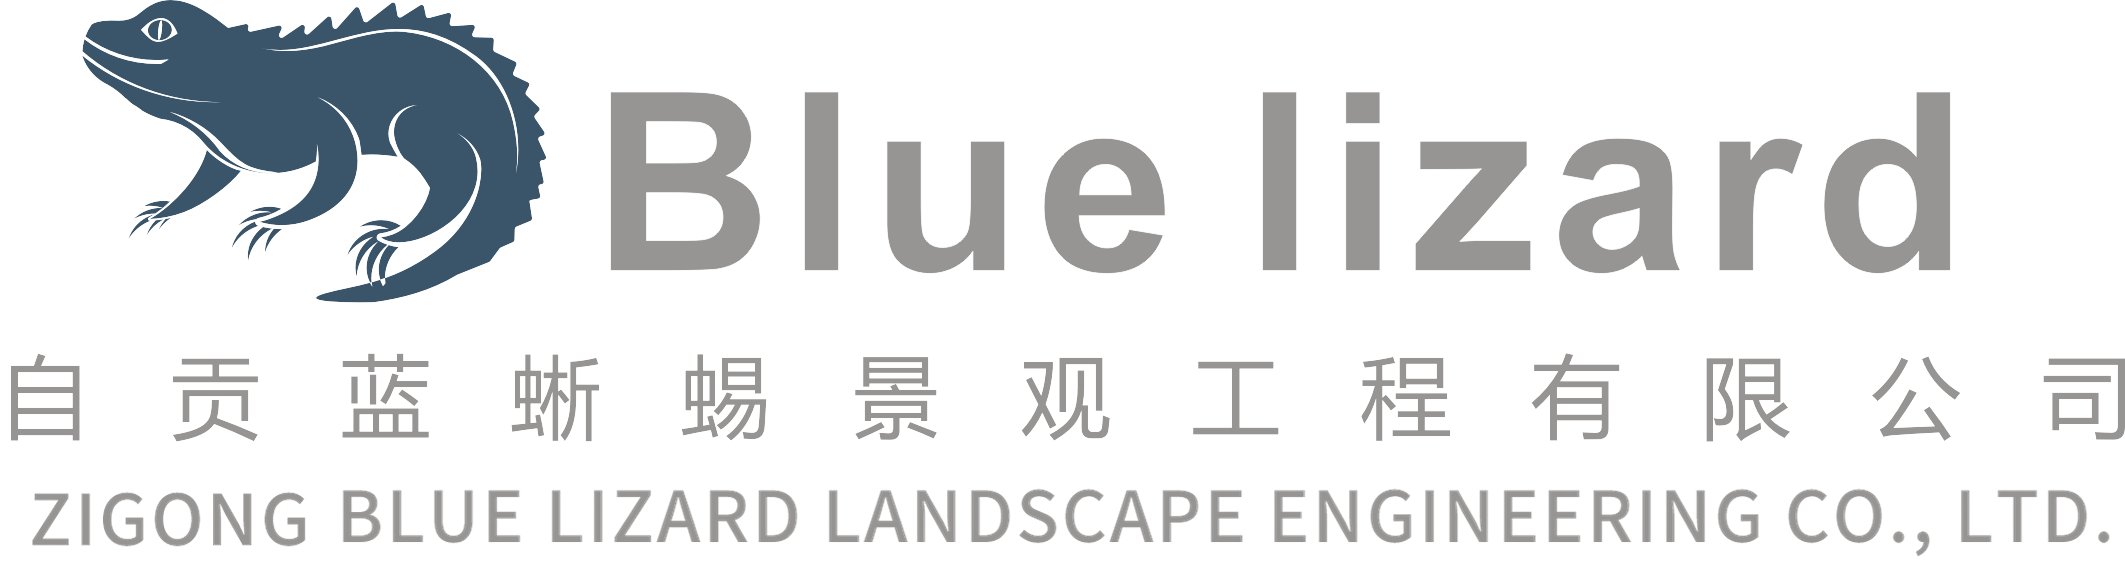 bluelizard logo